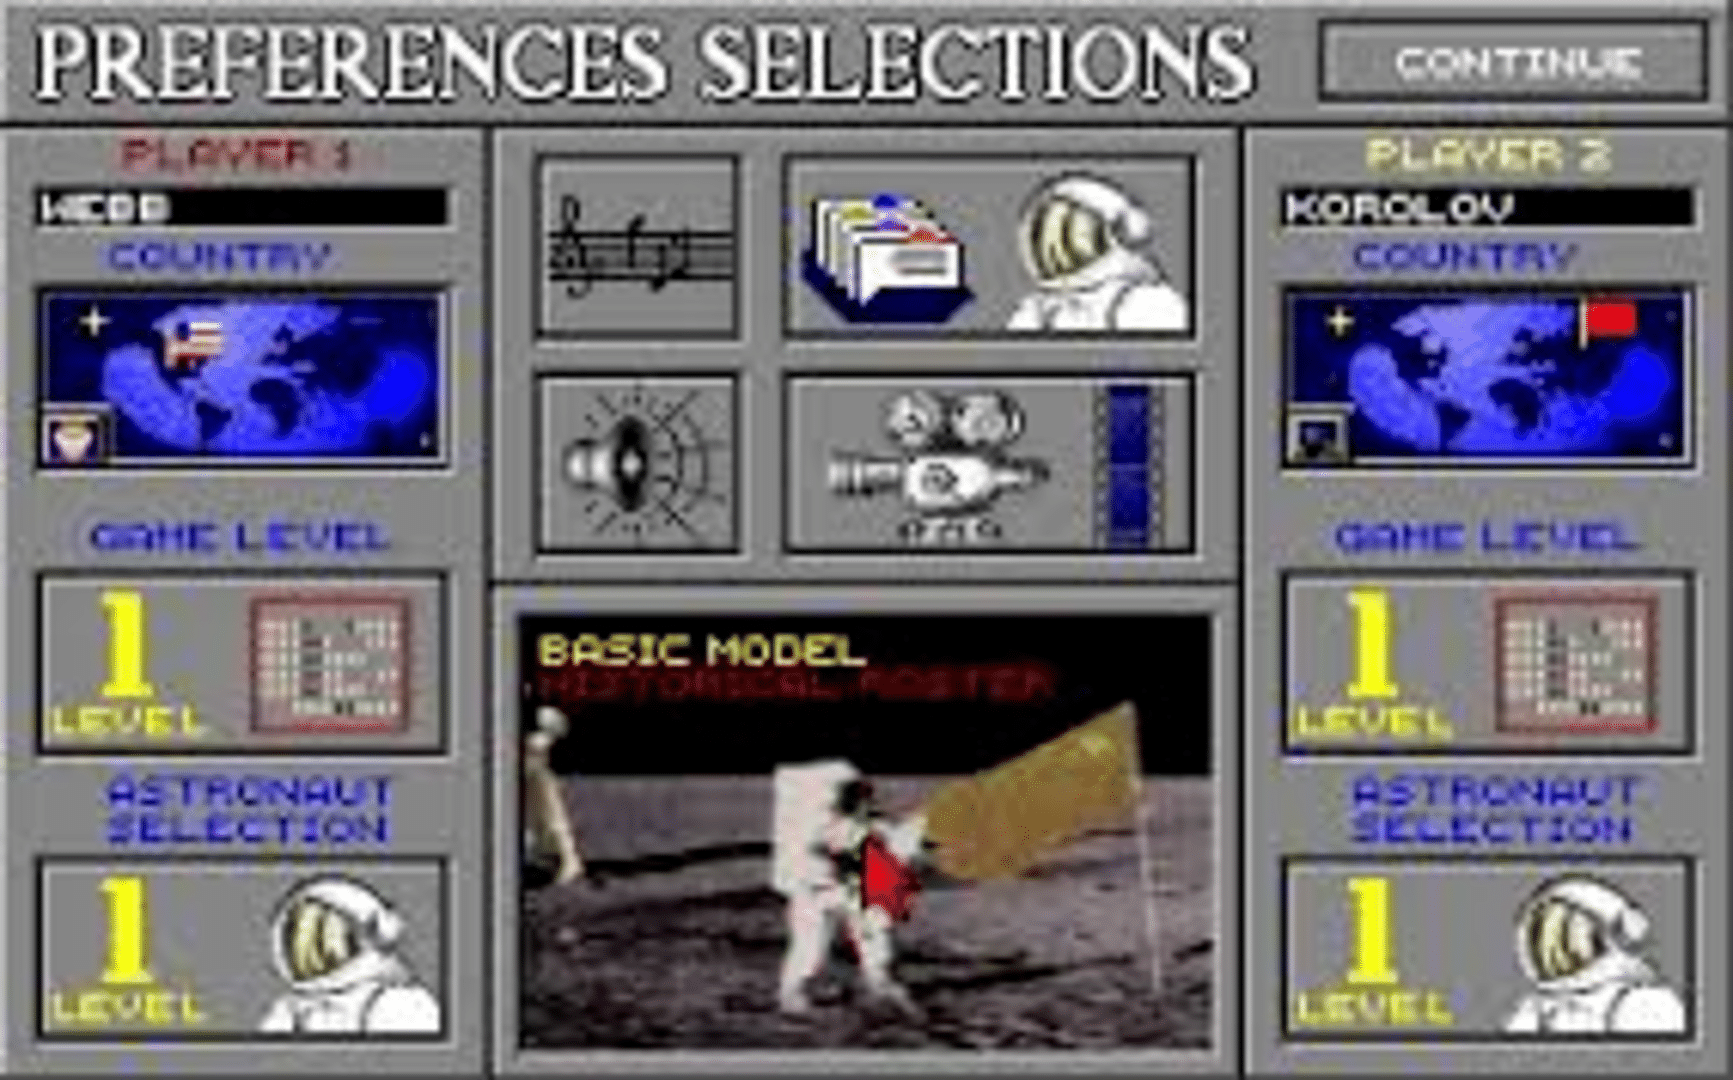 Buzz Aldrin's Race into Space screenshot